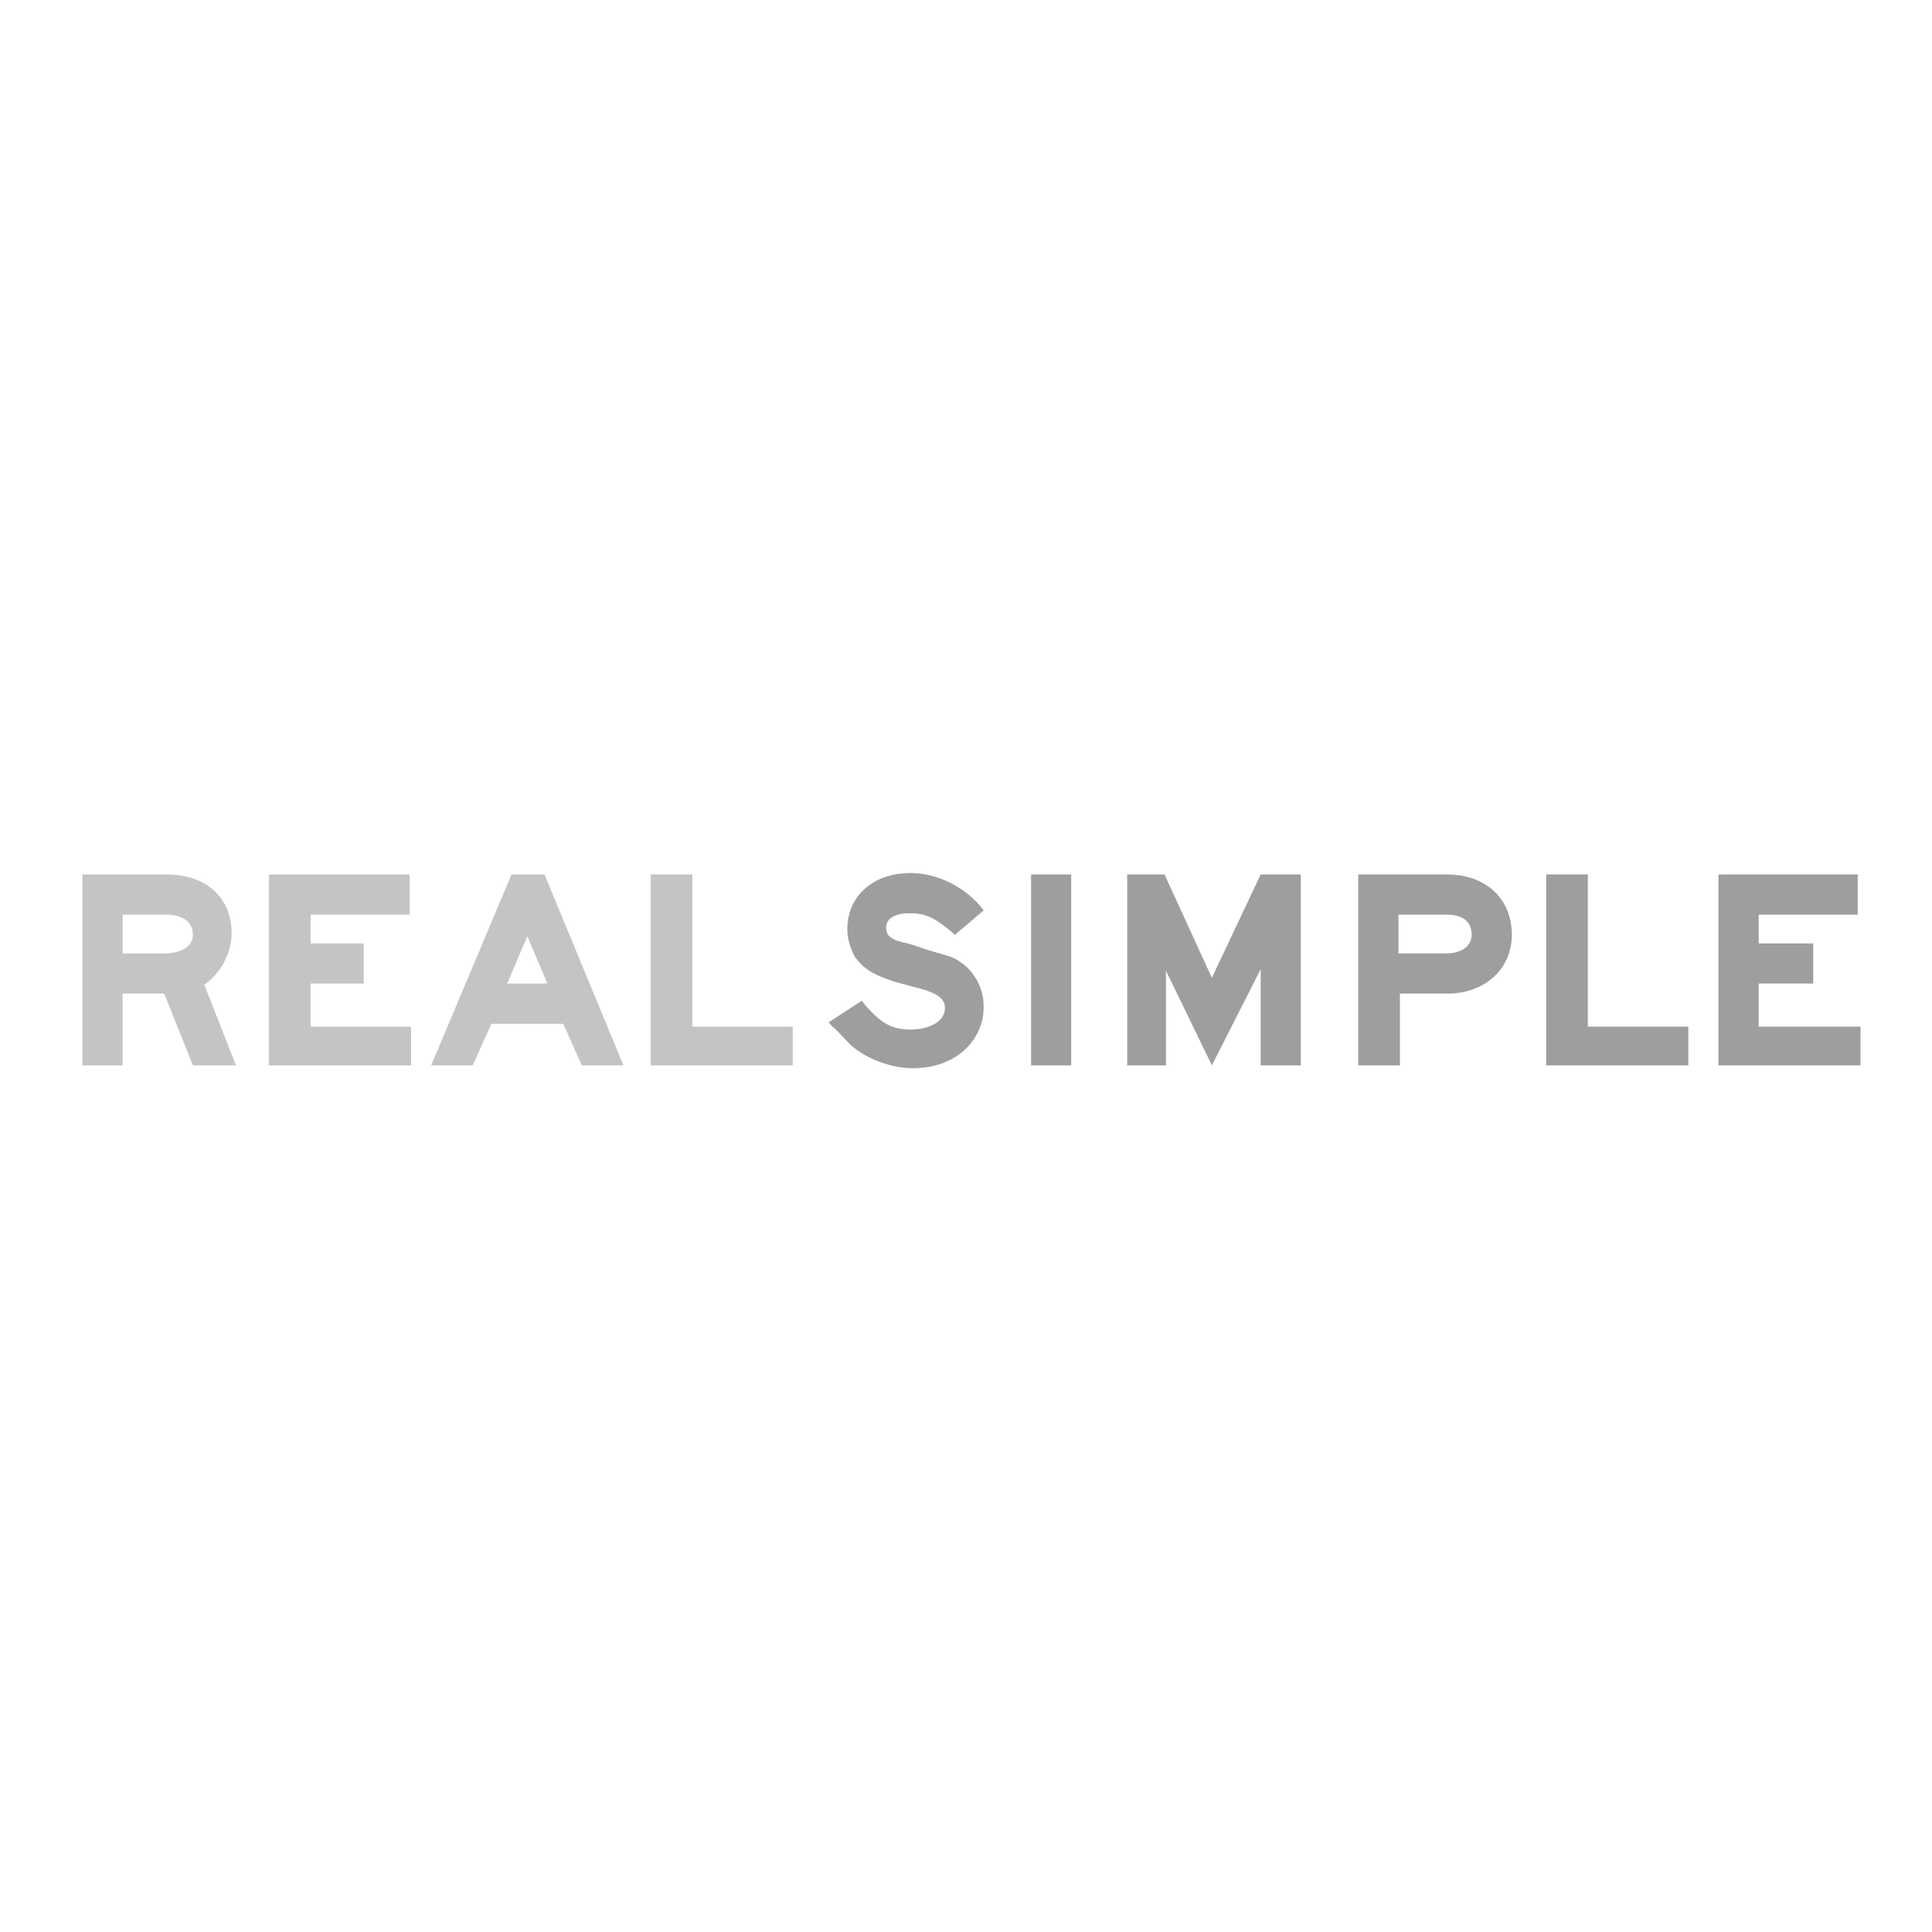 real-simple-logo-png-transparent.png